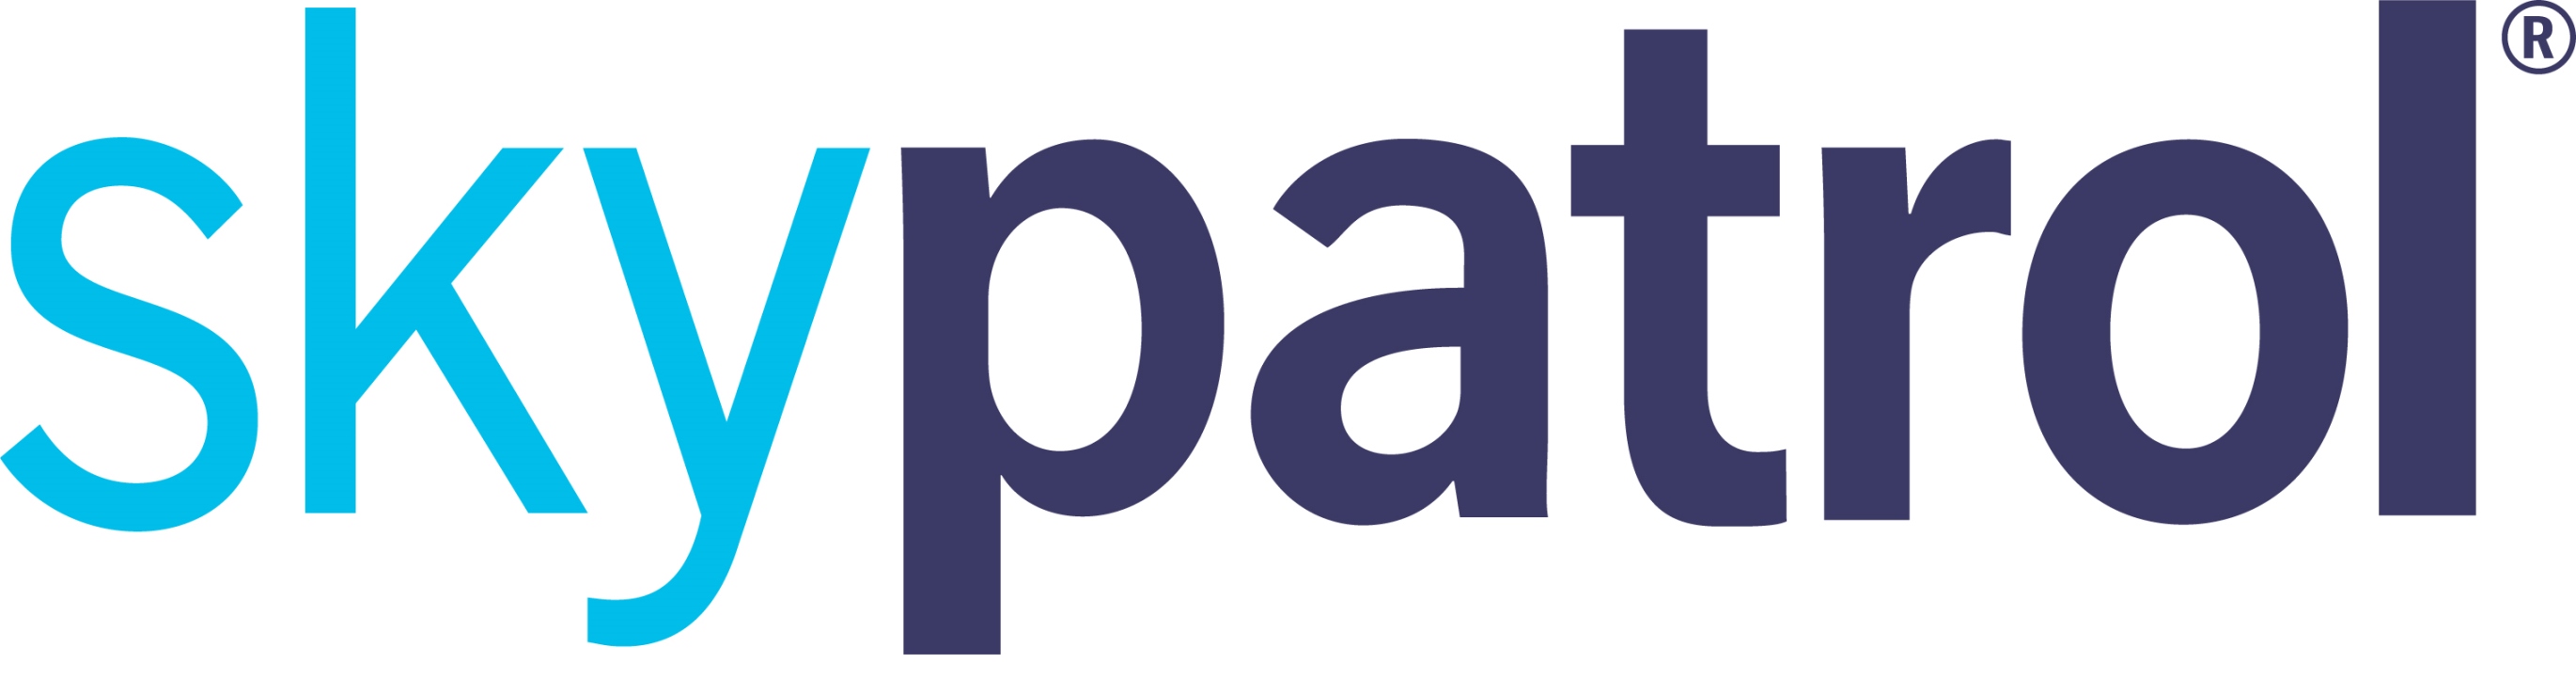 Skypatrol Logo photo - 1